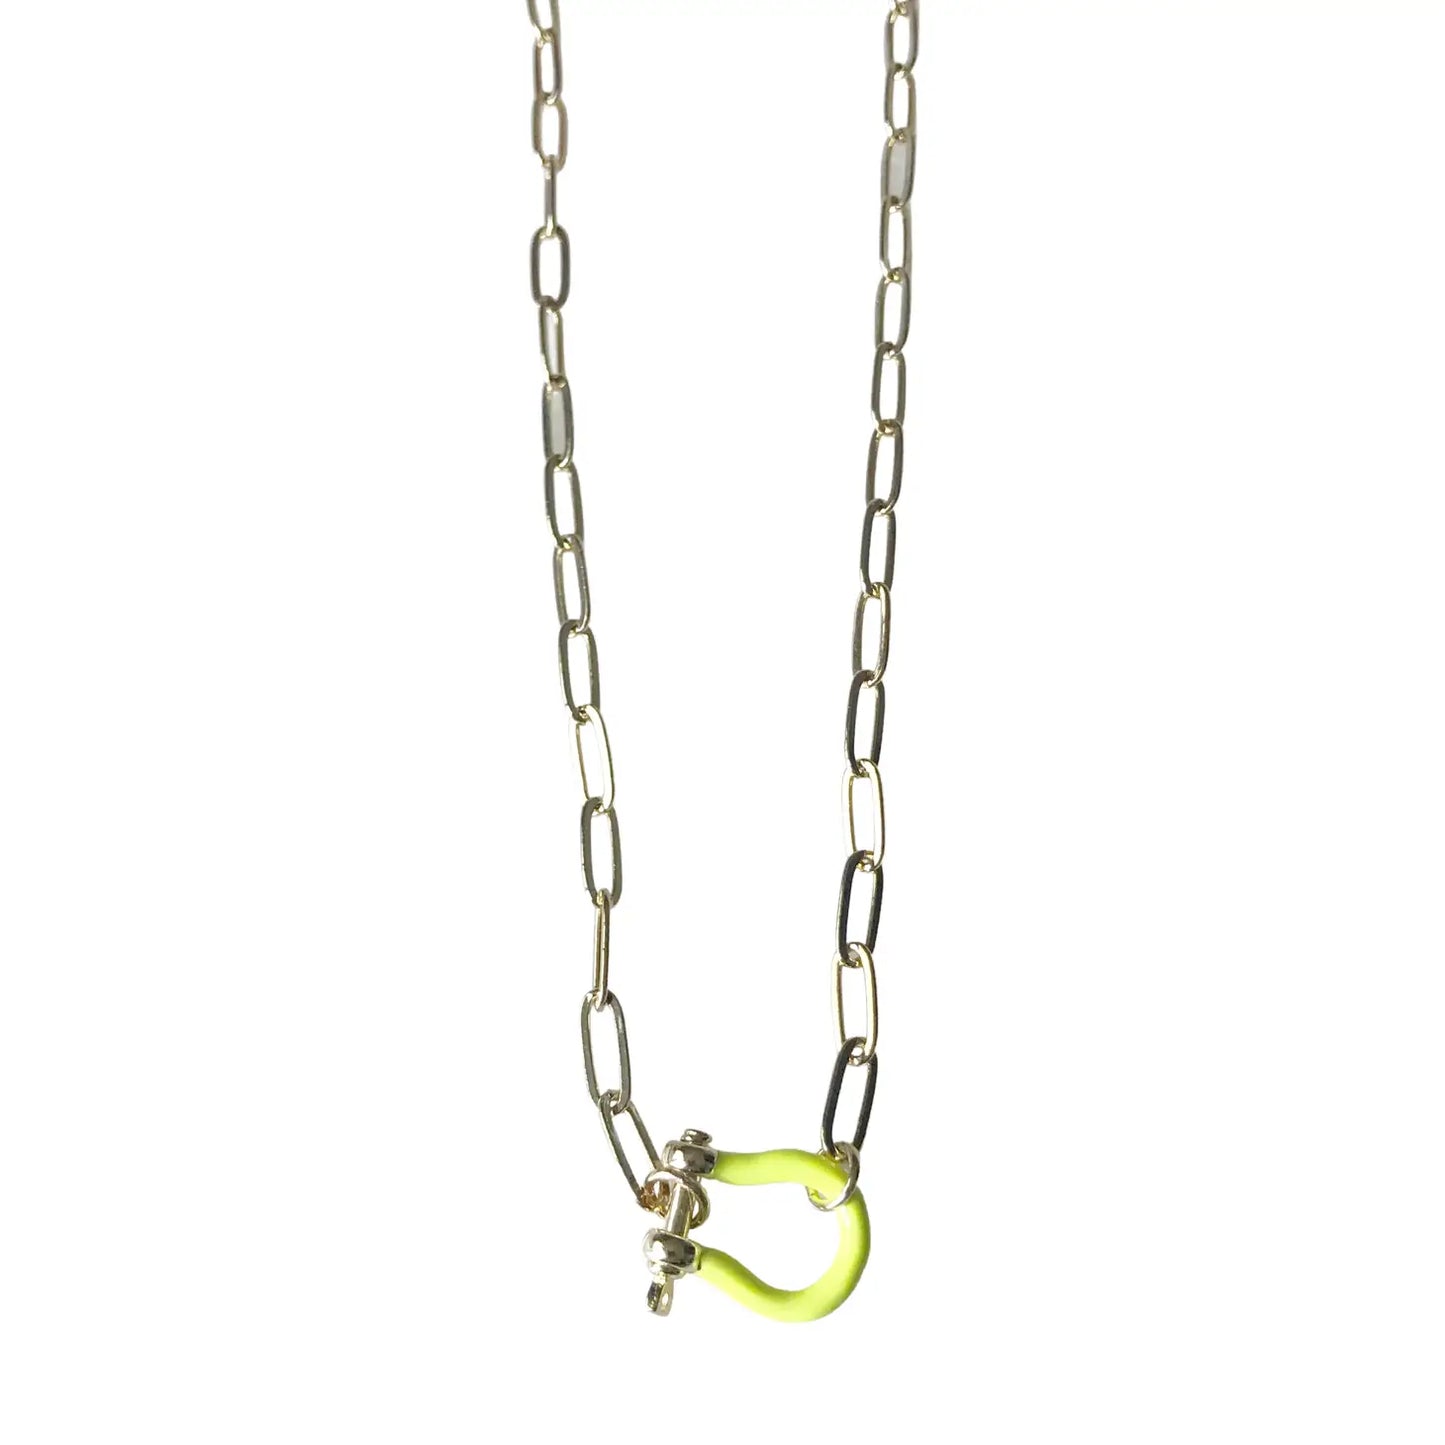 Neon Yellow Choker Necklace